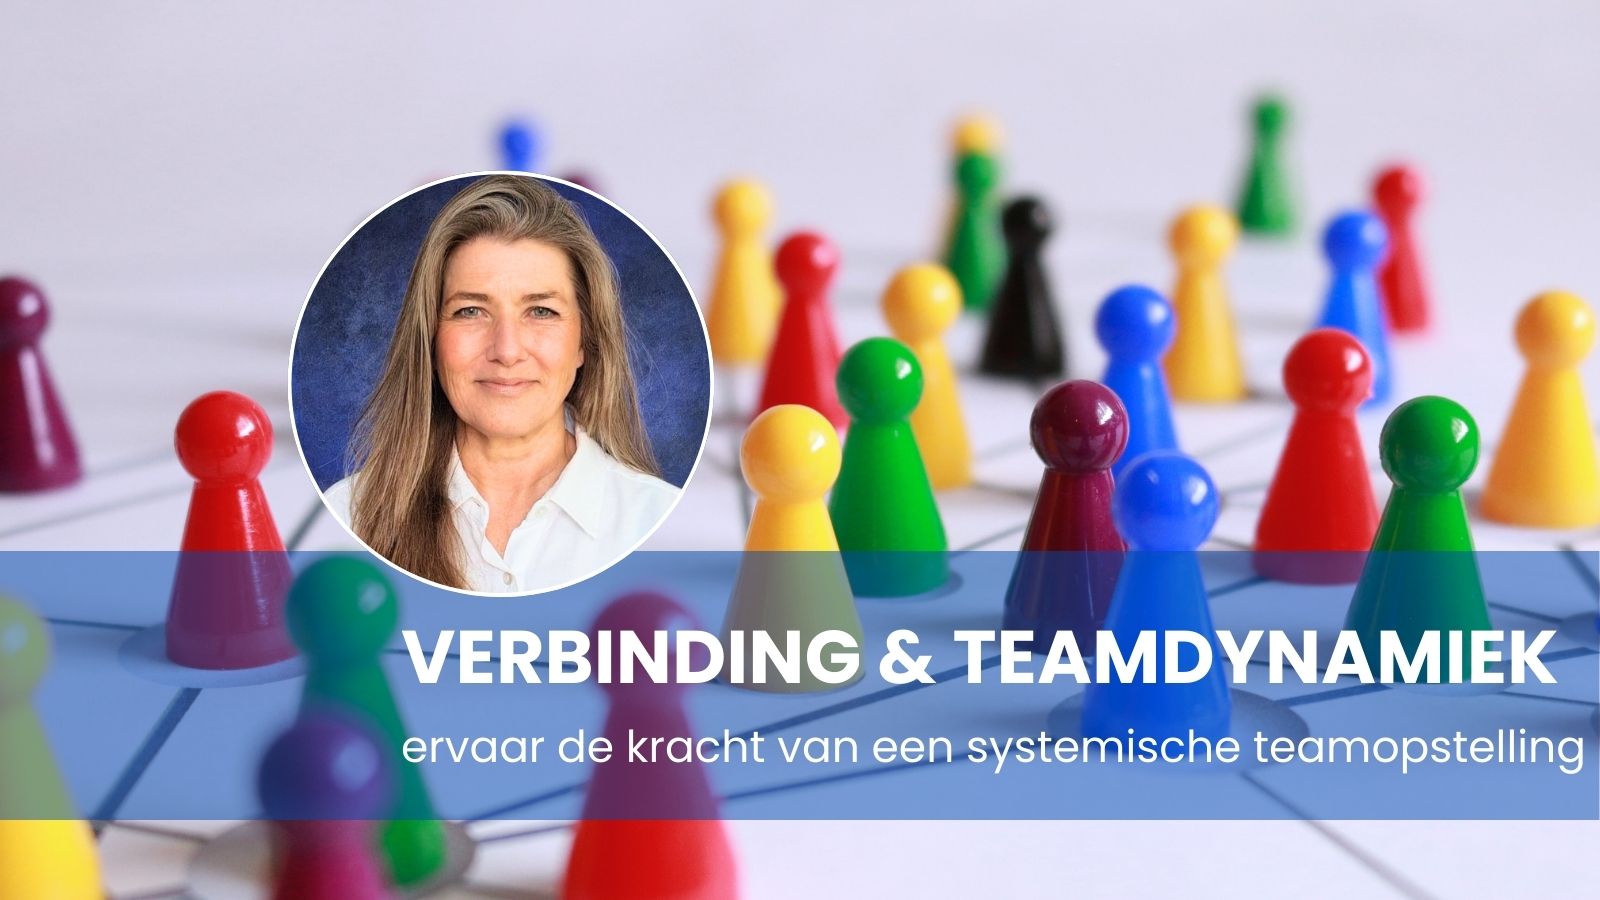 Amsterdam: Systemische teamopstelling